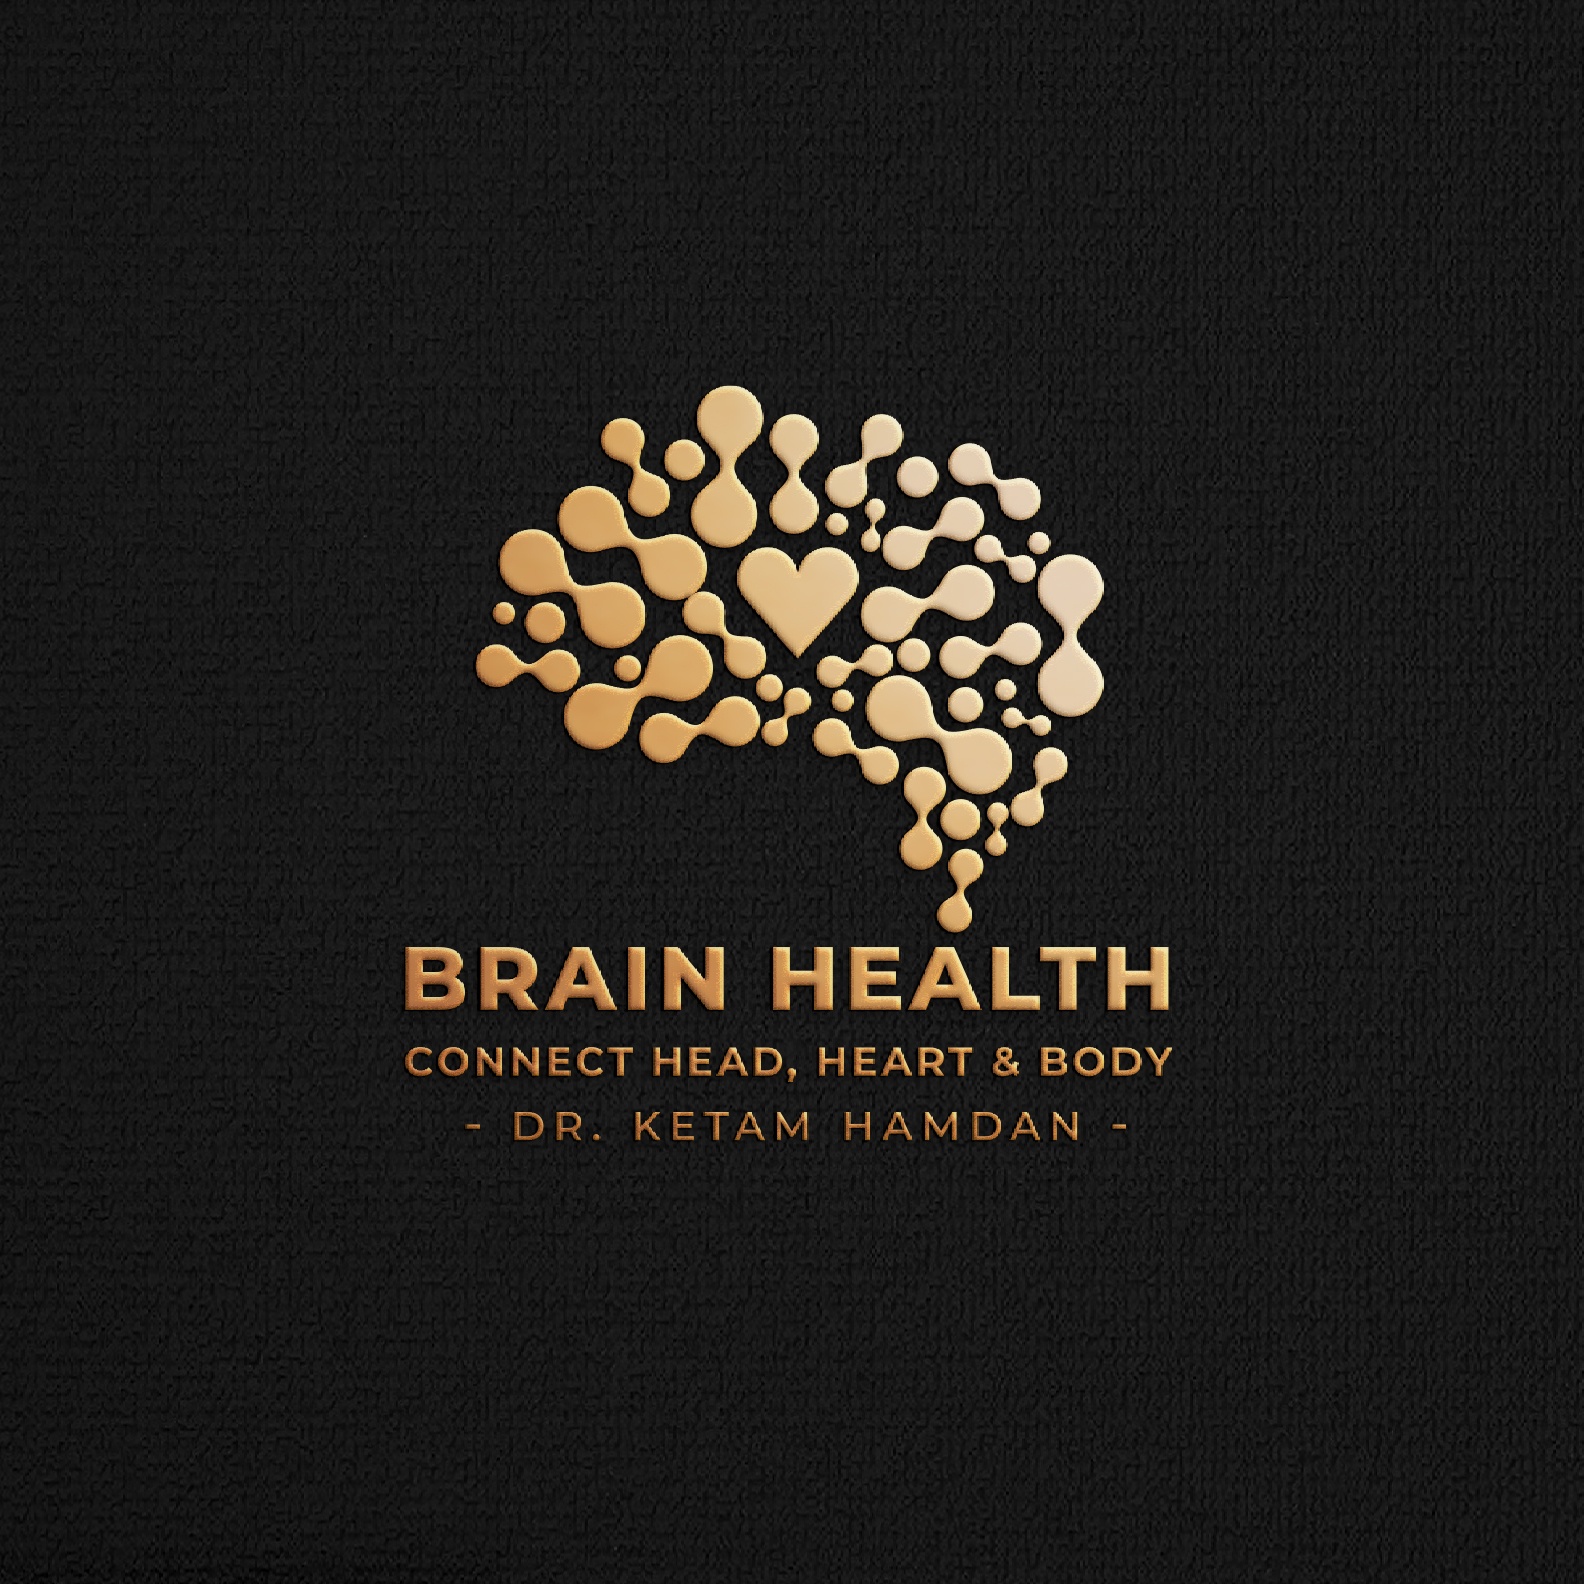 About Brain Health 